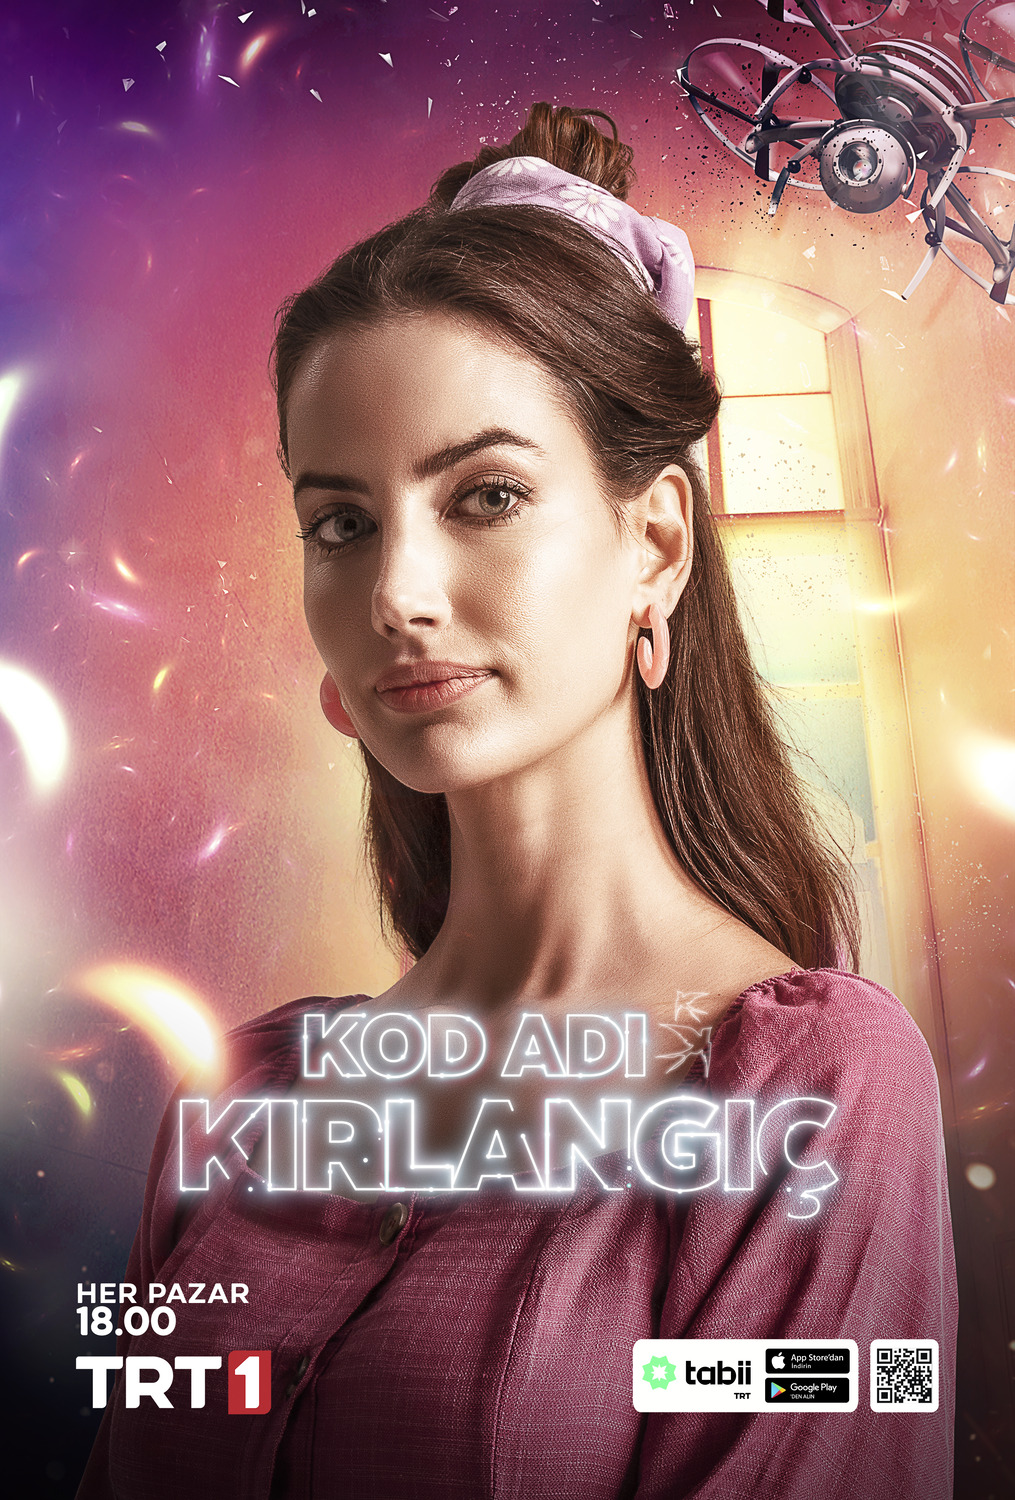 Extra Large TV Poster Image for Kod Adı Kırlangıç (#7 of 11)